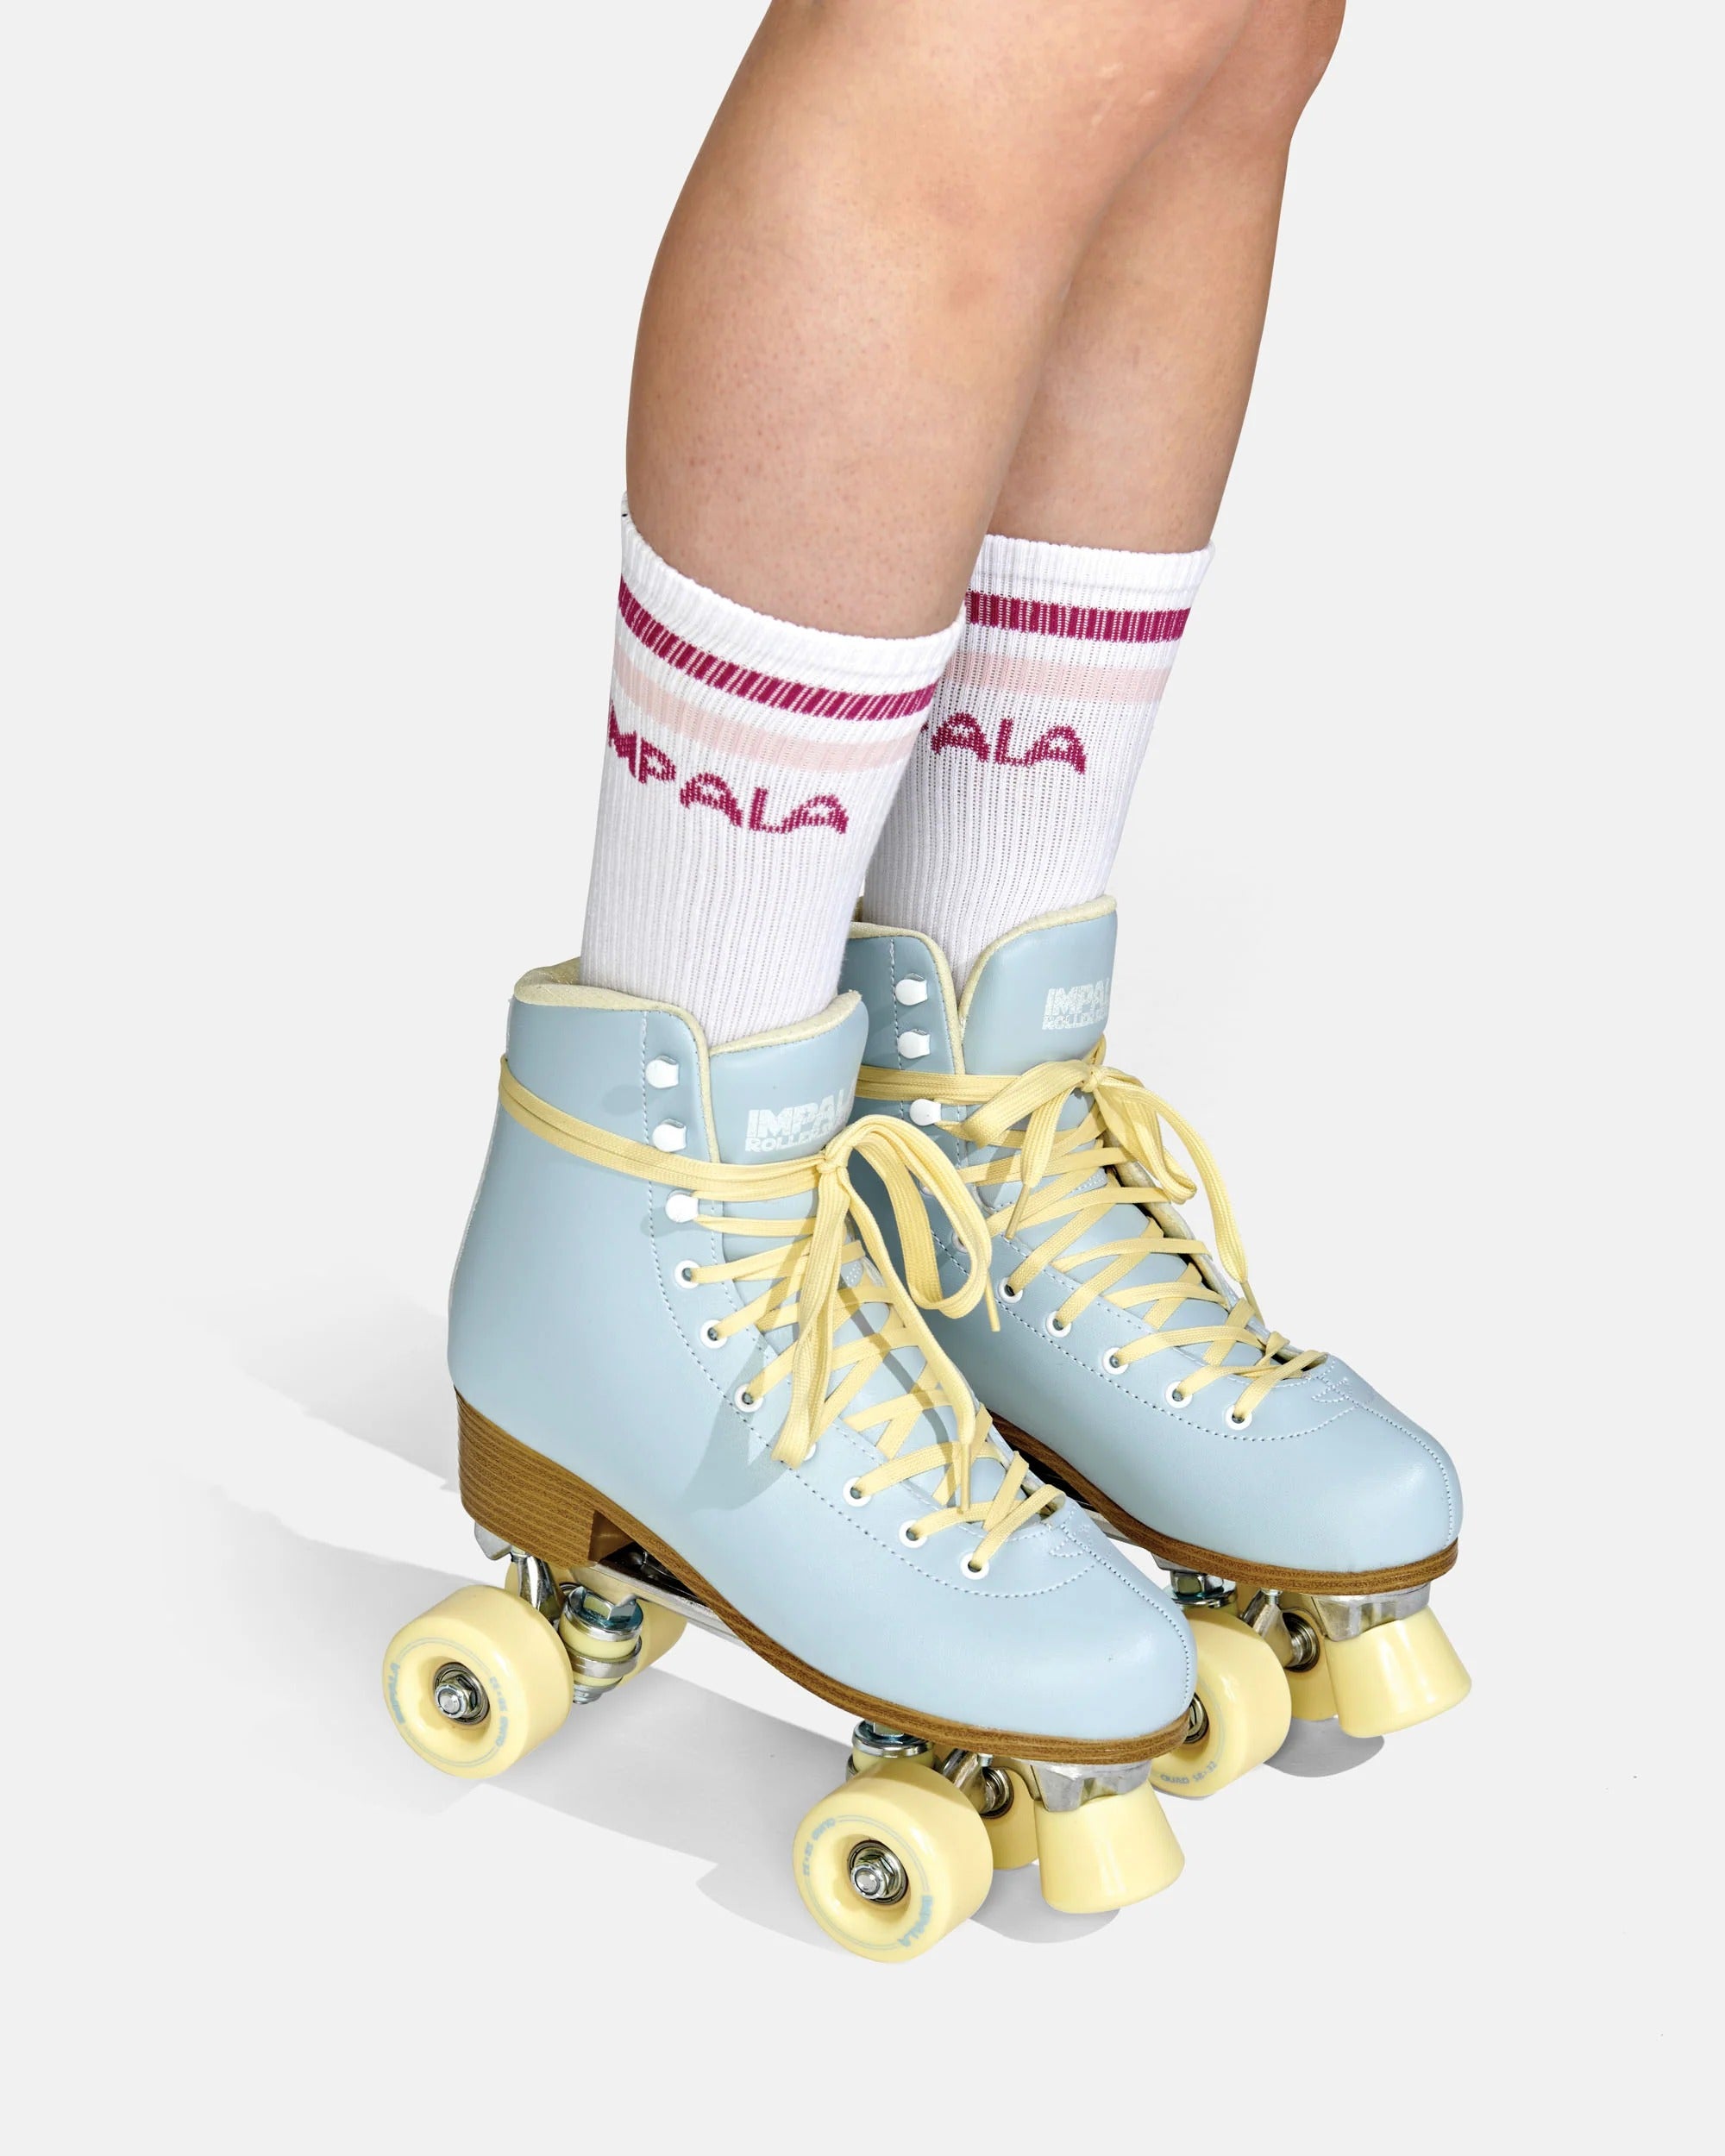 IMPALA - Pastel Stripe 3-pack Socks